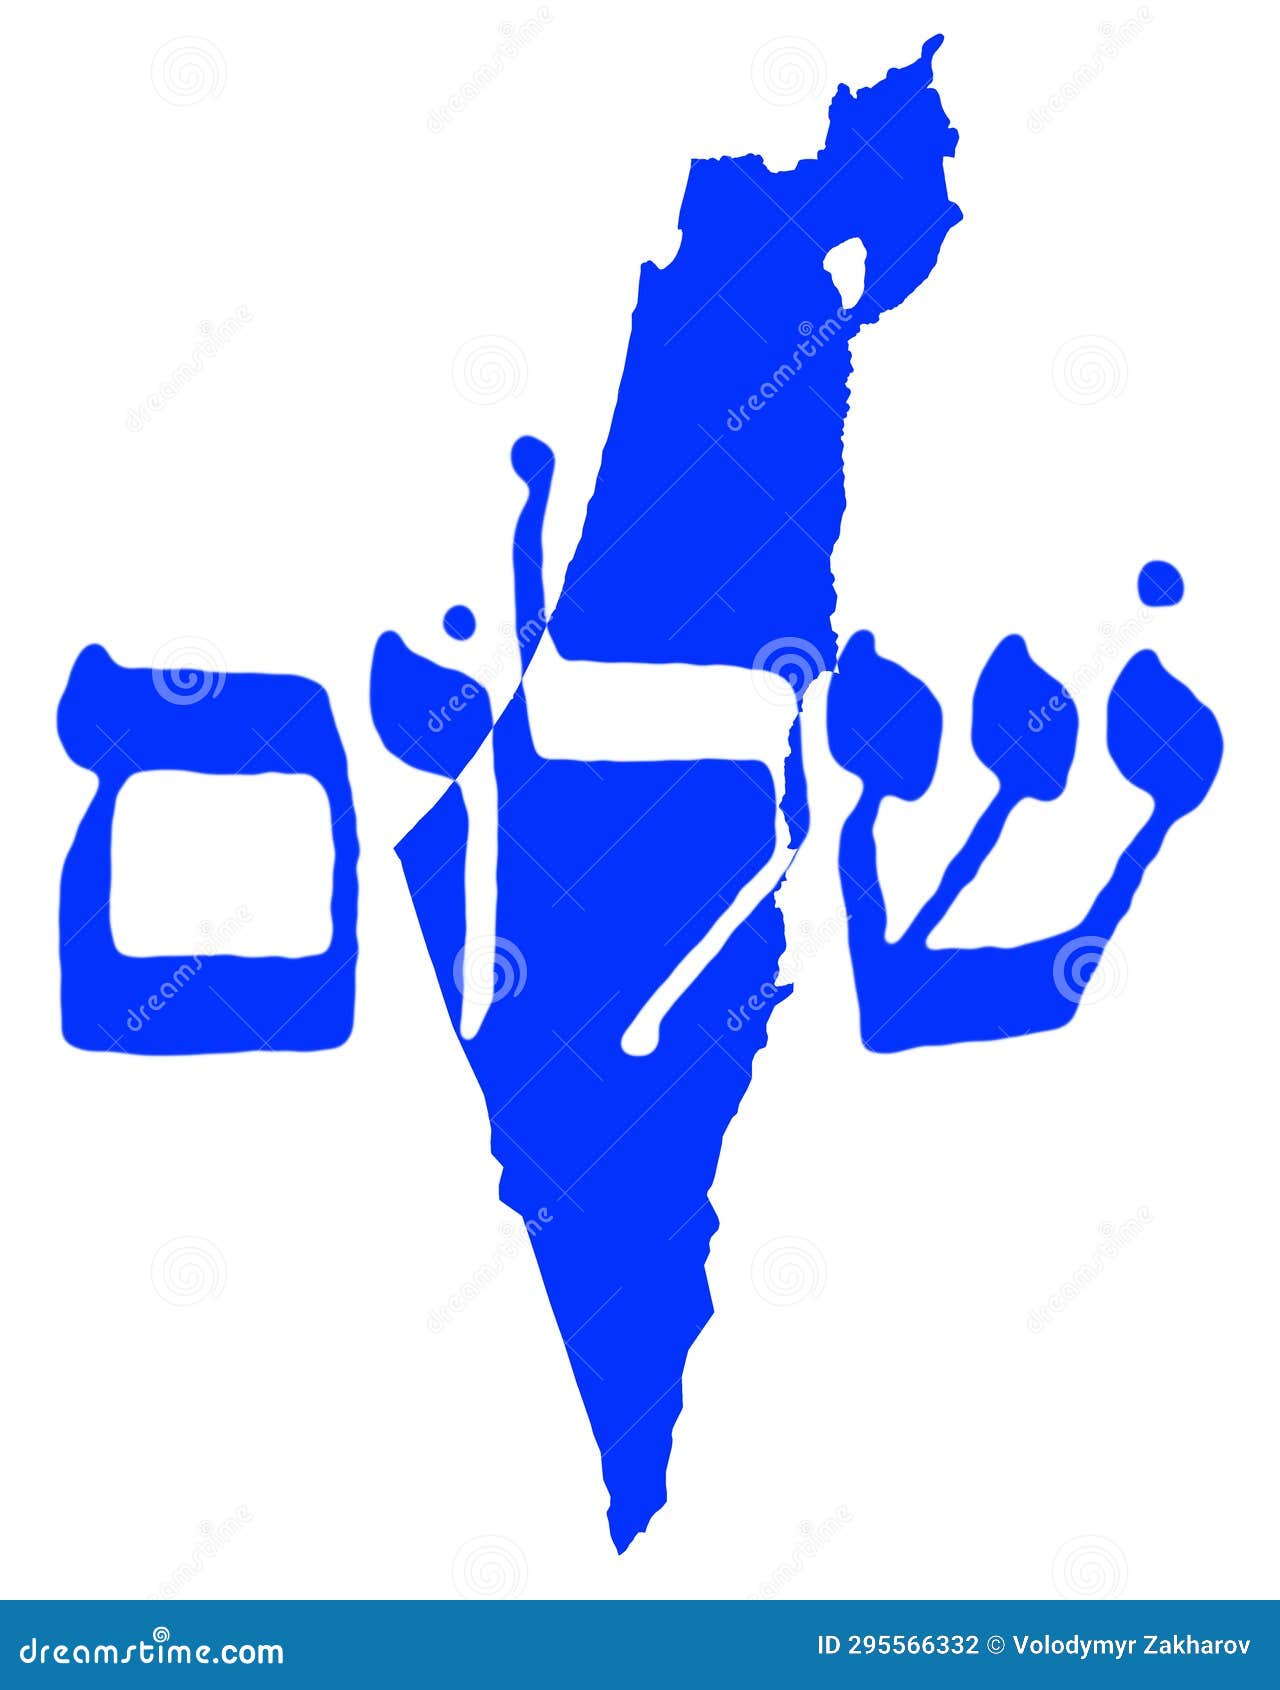 Flag of Israel and text SHABBAT SHALOM on wooden background Stock Photo